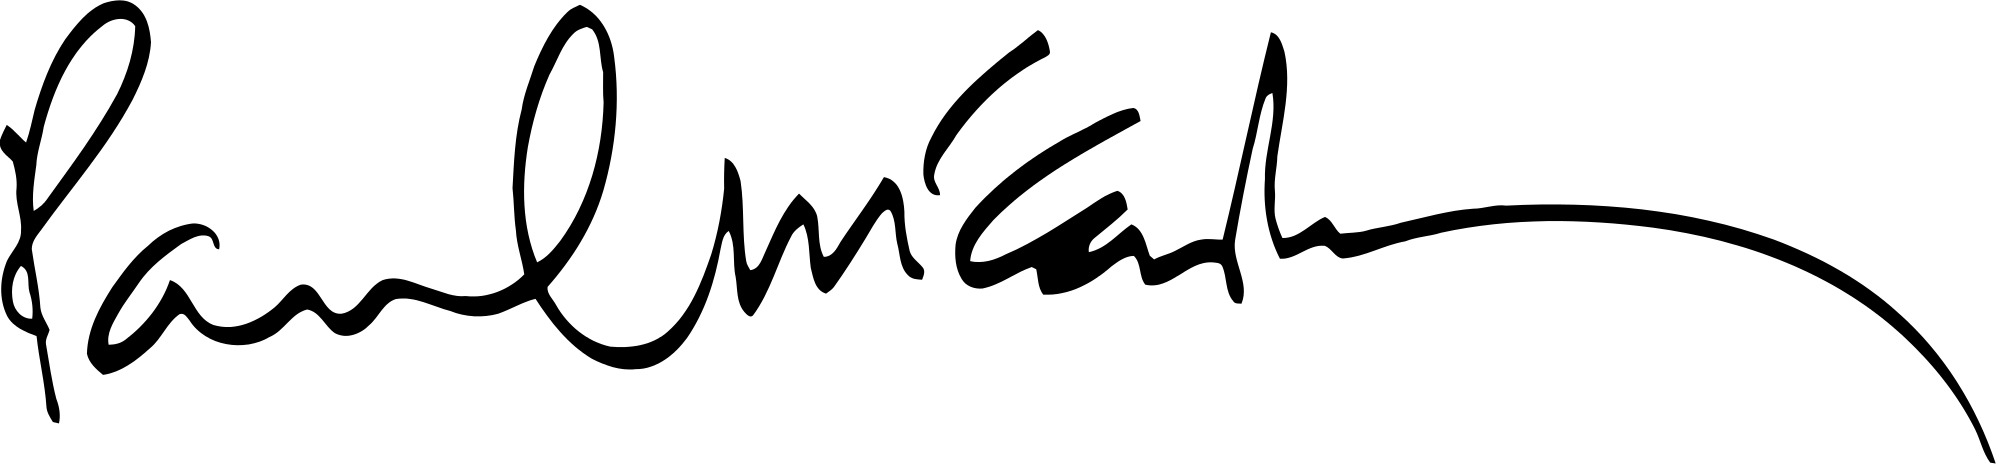 Paul Mc Cartney Signature PNG icons